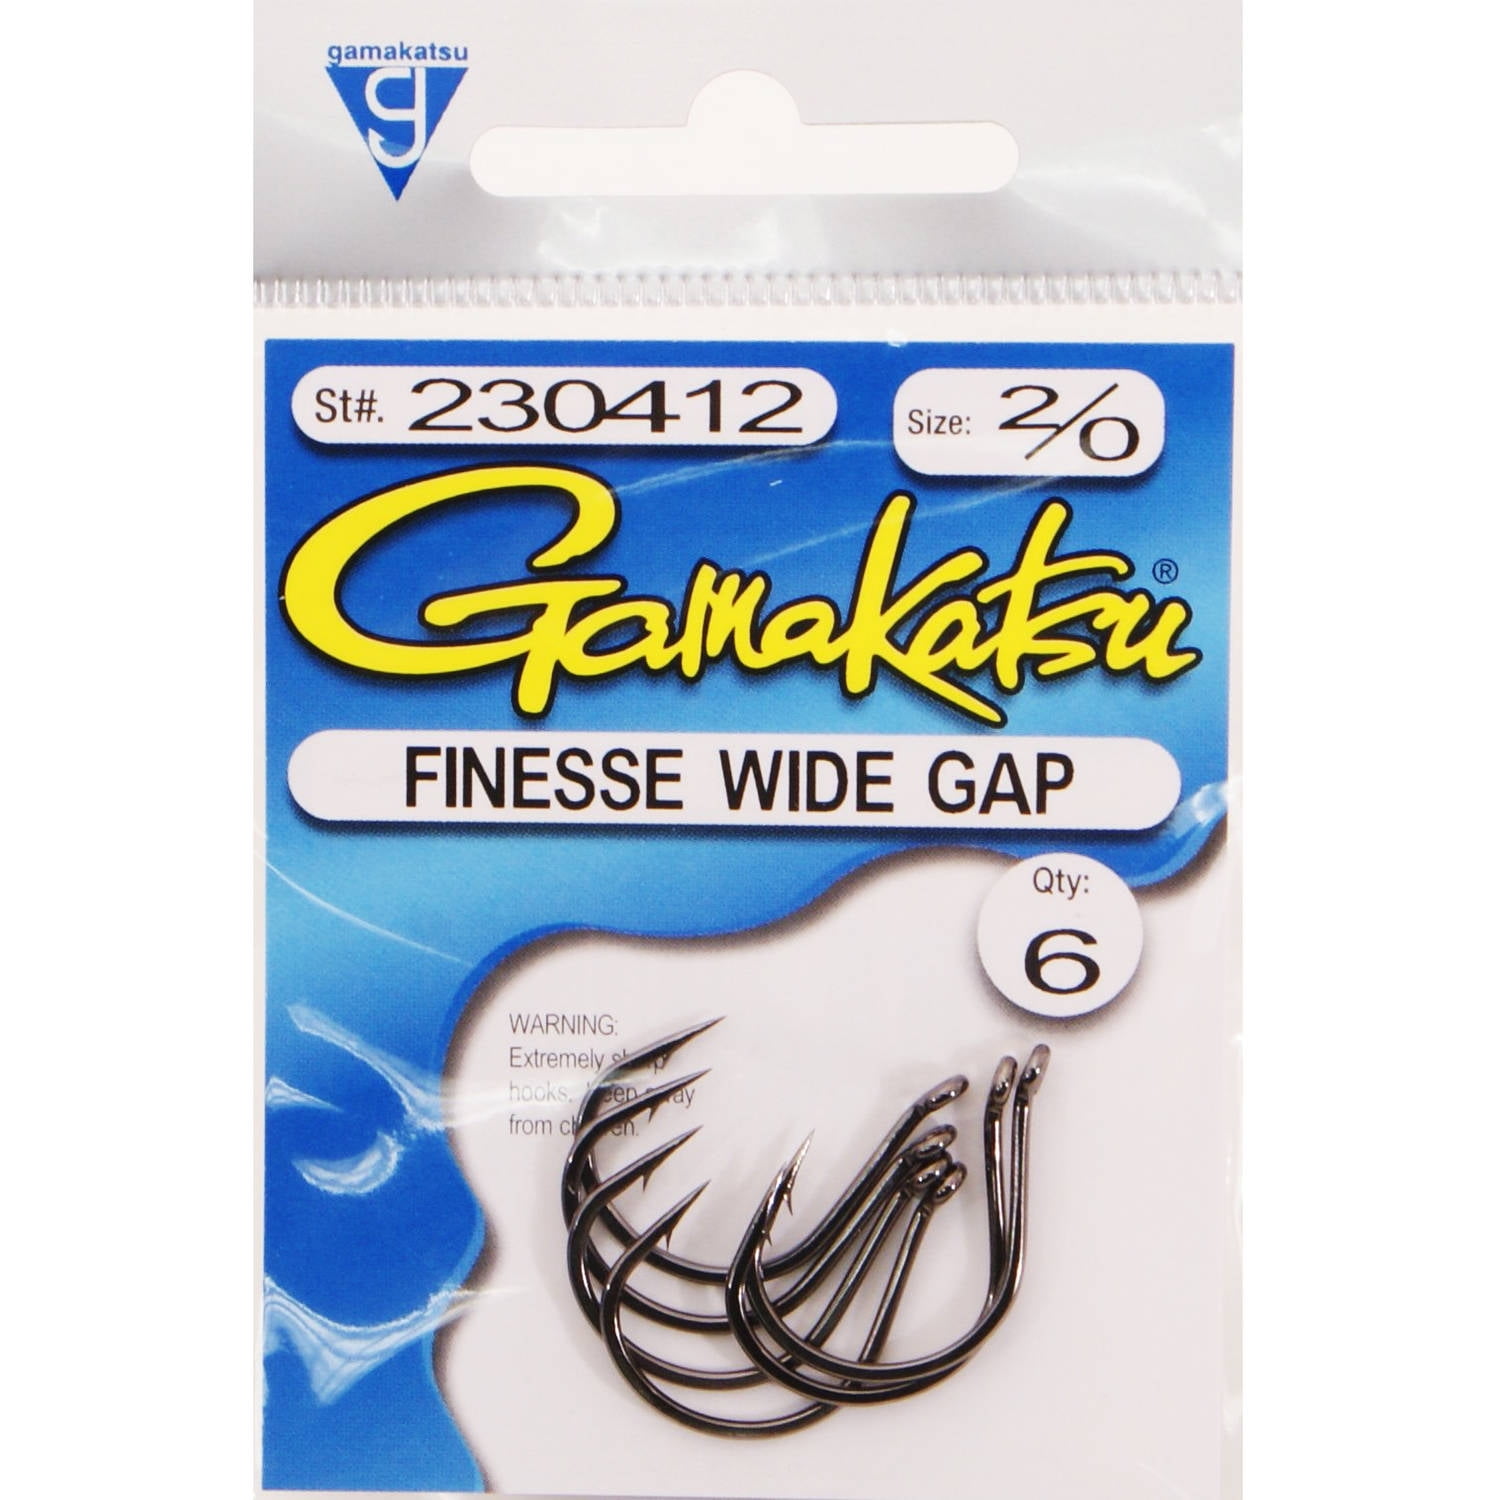 Gamakatsu 230411 Finesse Wide Gap Hook Size 1/0 NS Black per 6 for sale online 